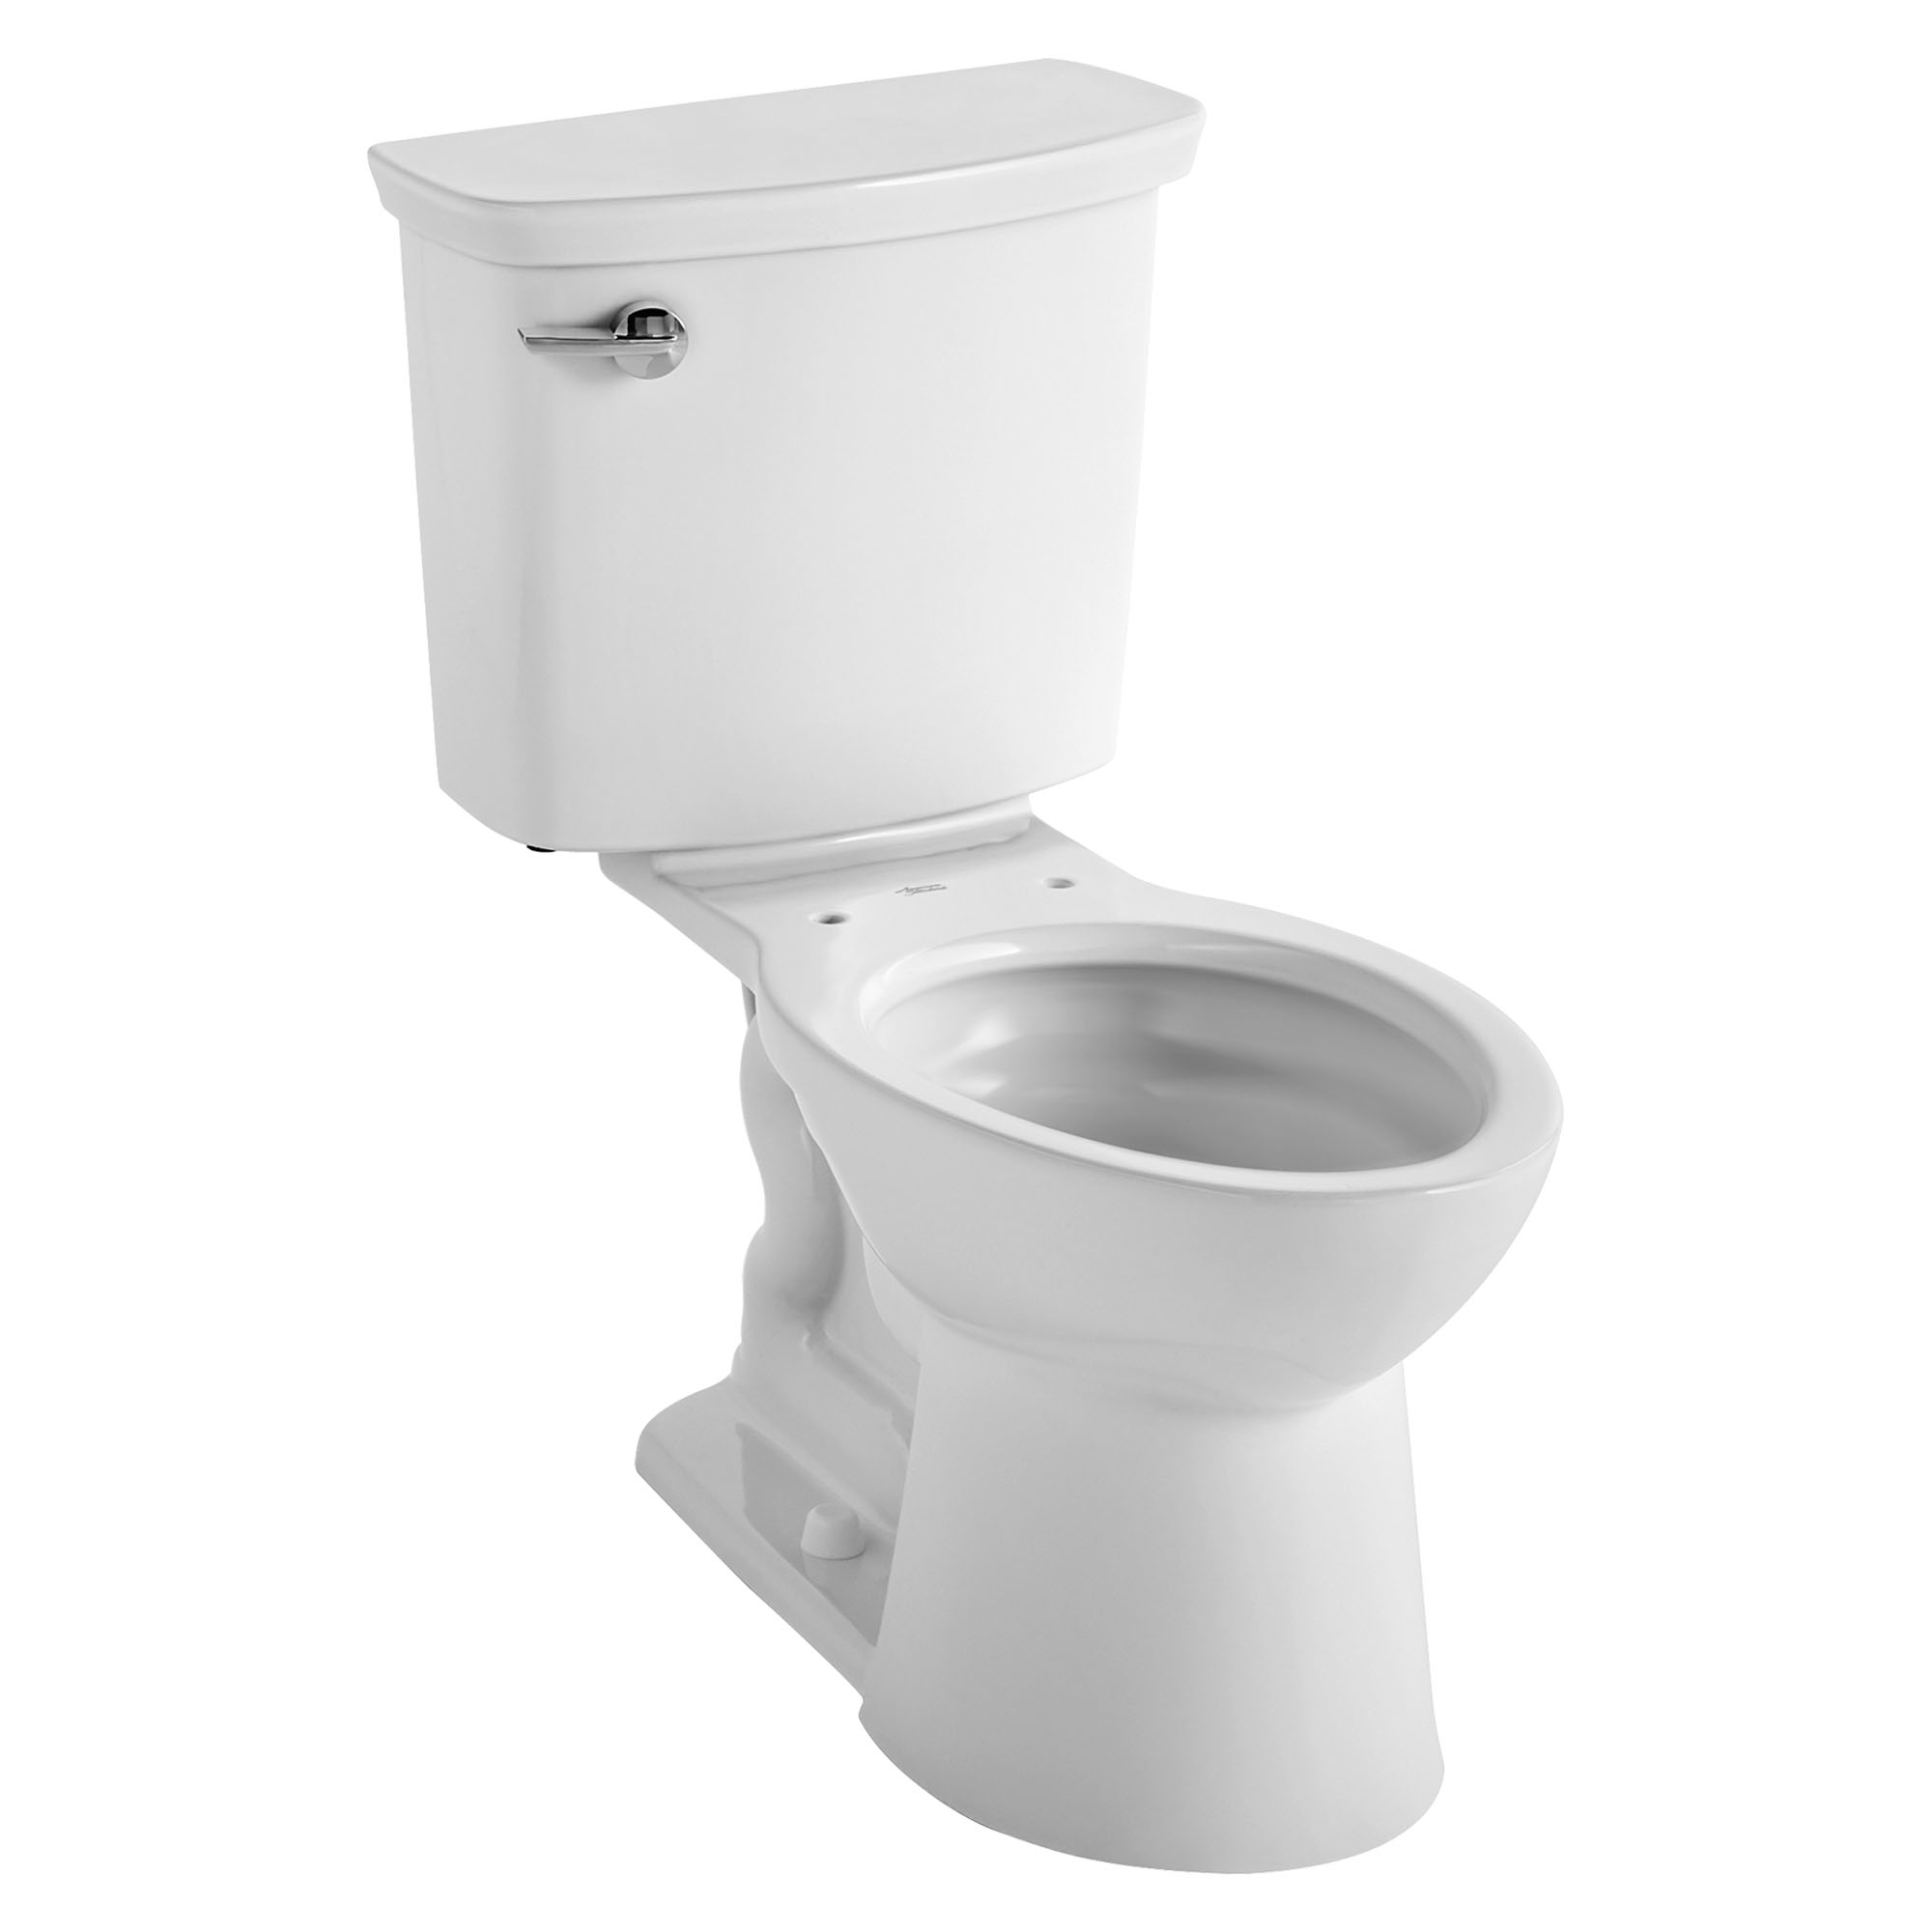 Gman toilet 2.0 vs gman toilet 3.0#dafuqboom